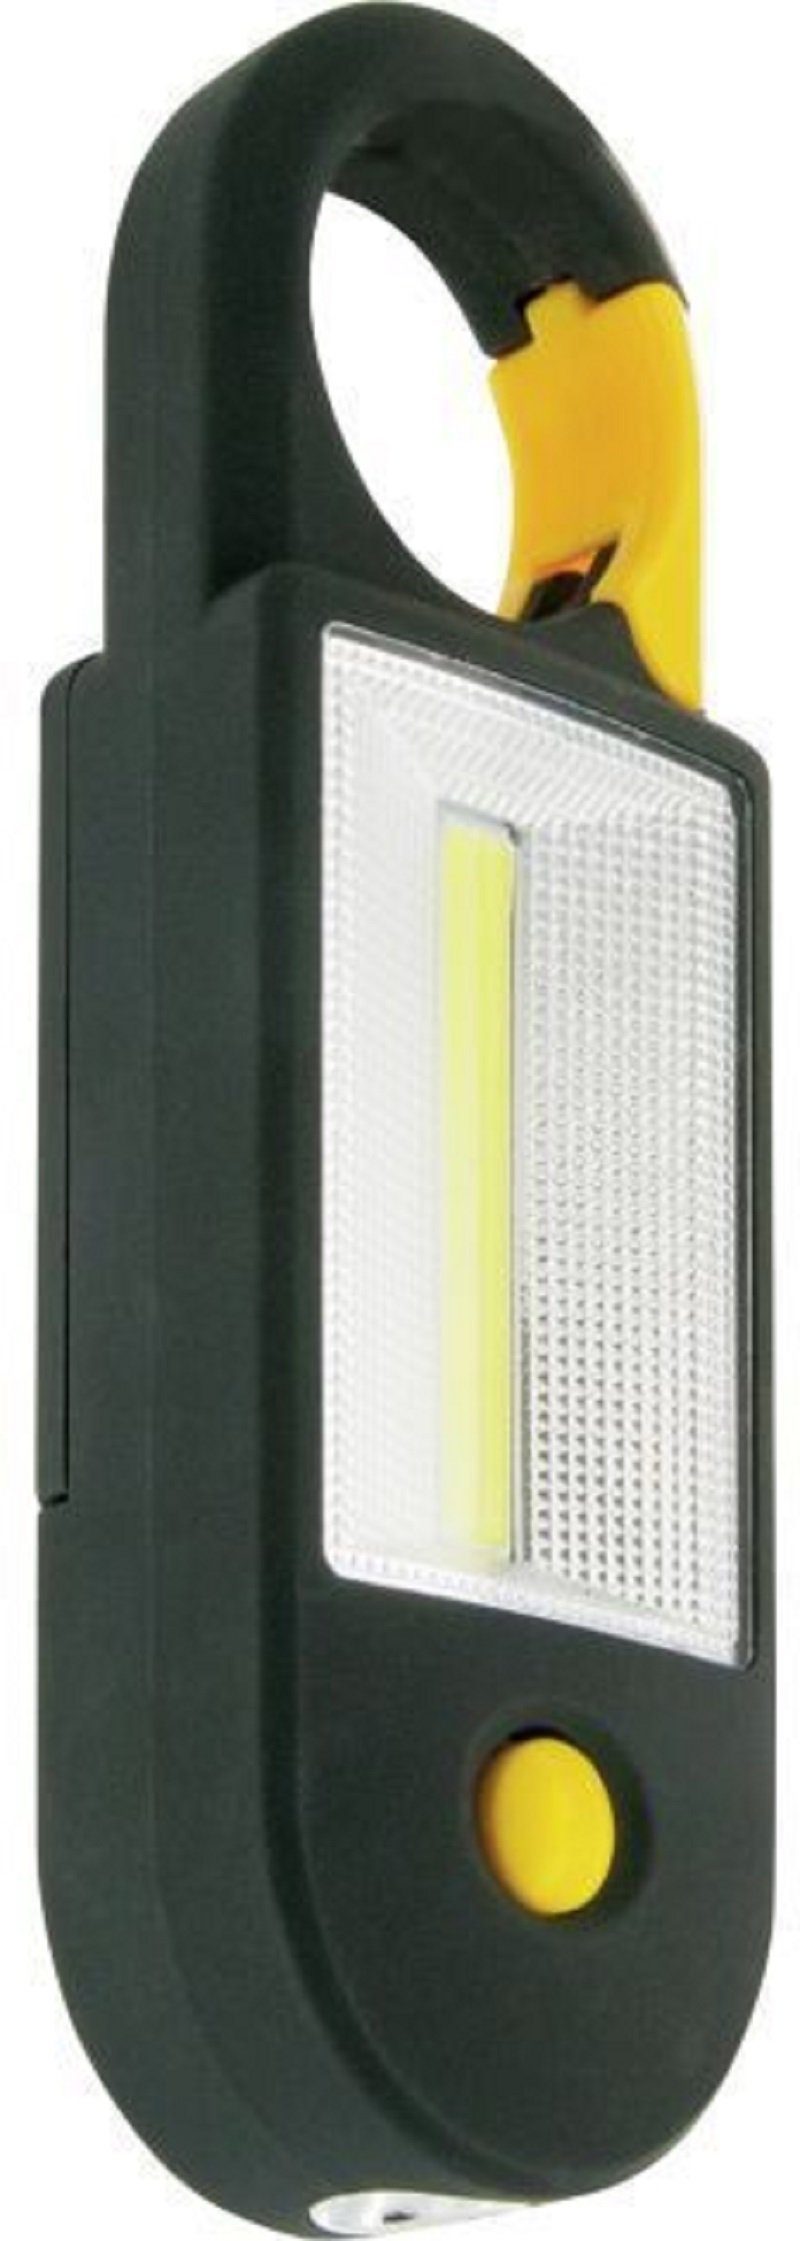 Schwaiger LED Taschenlampe LED COB VDWLED4 Taschenlampe IP44 533